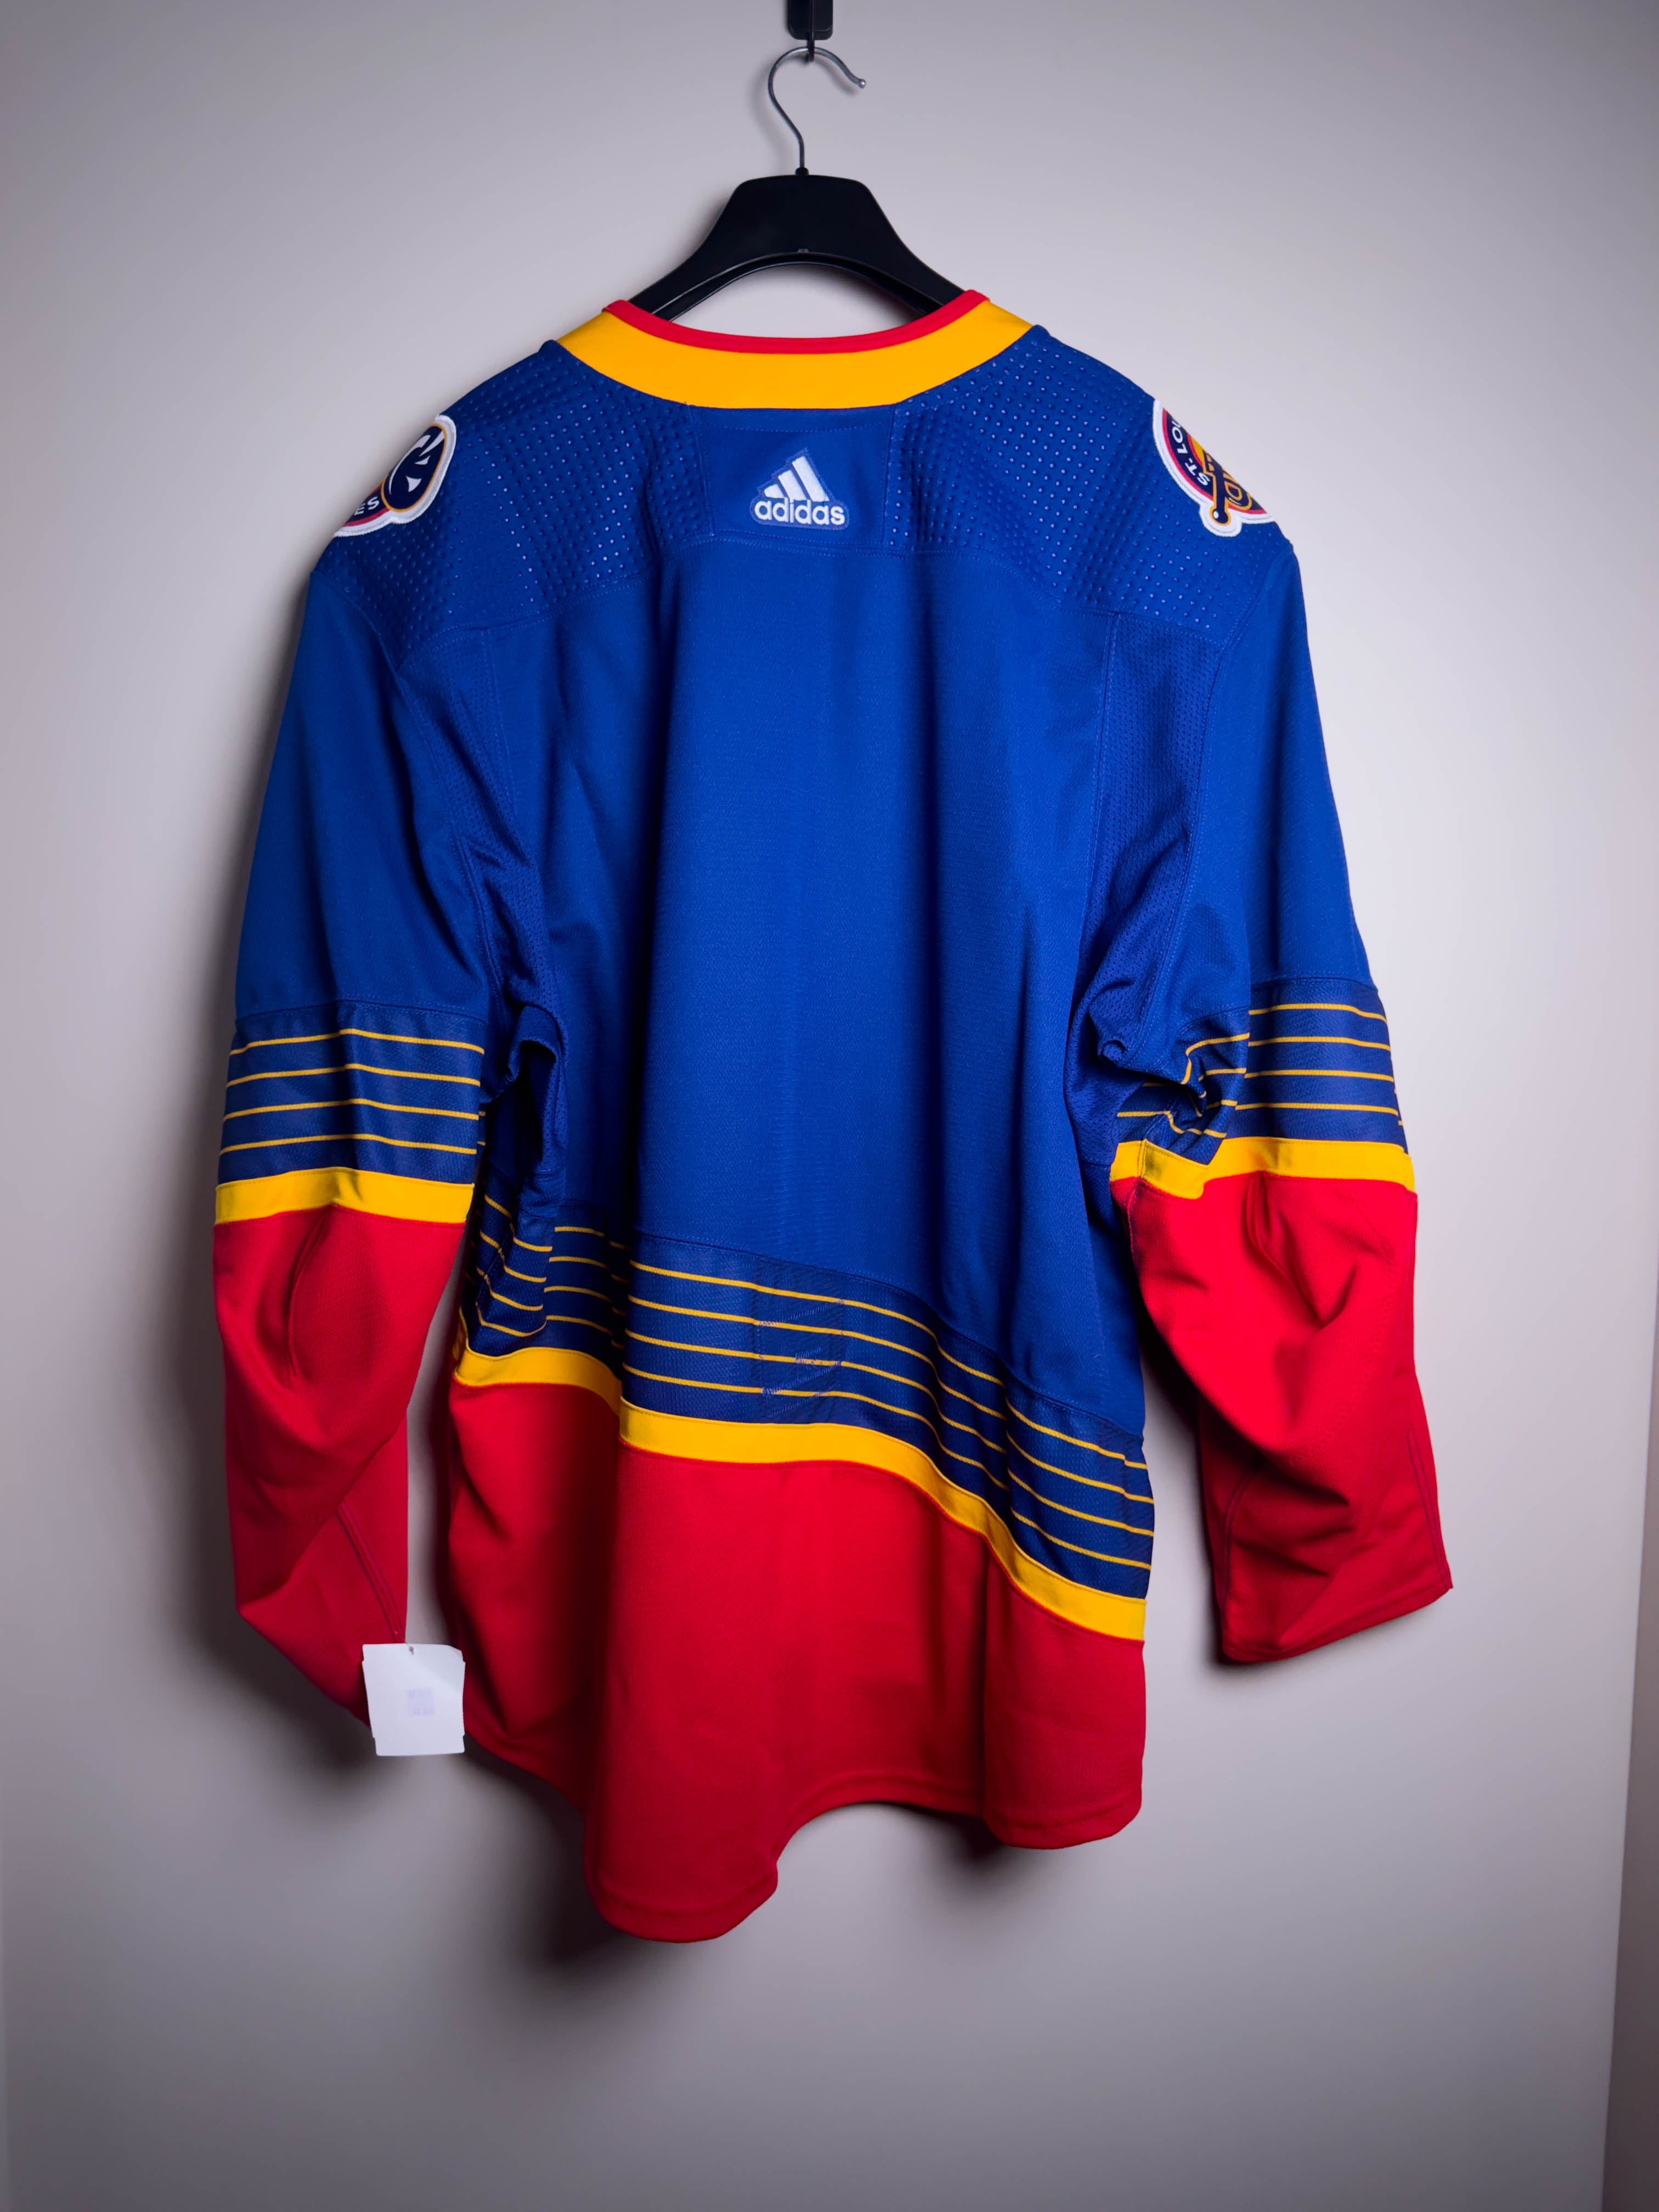 Vintage Starter Chicago Blackhawks jersey. Size XL $60 SOLD